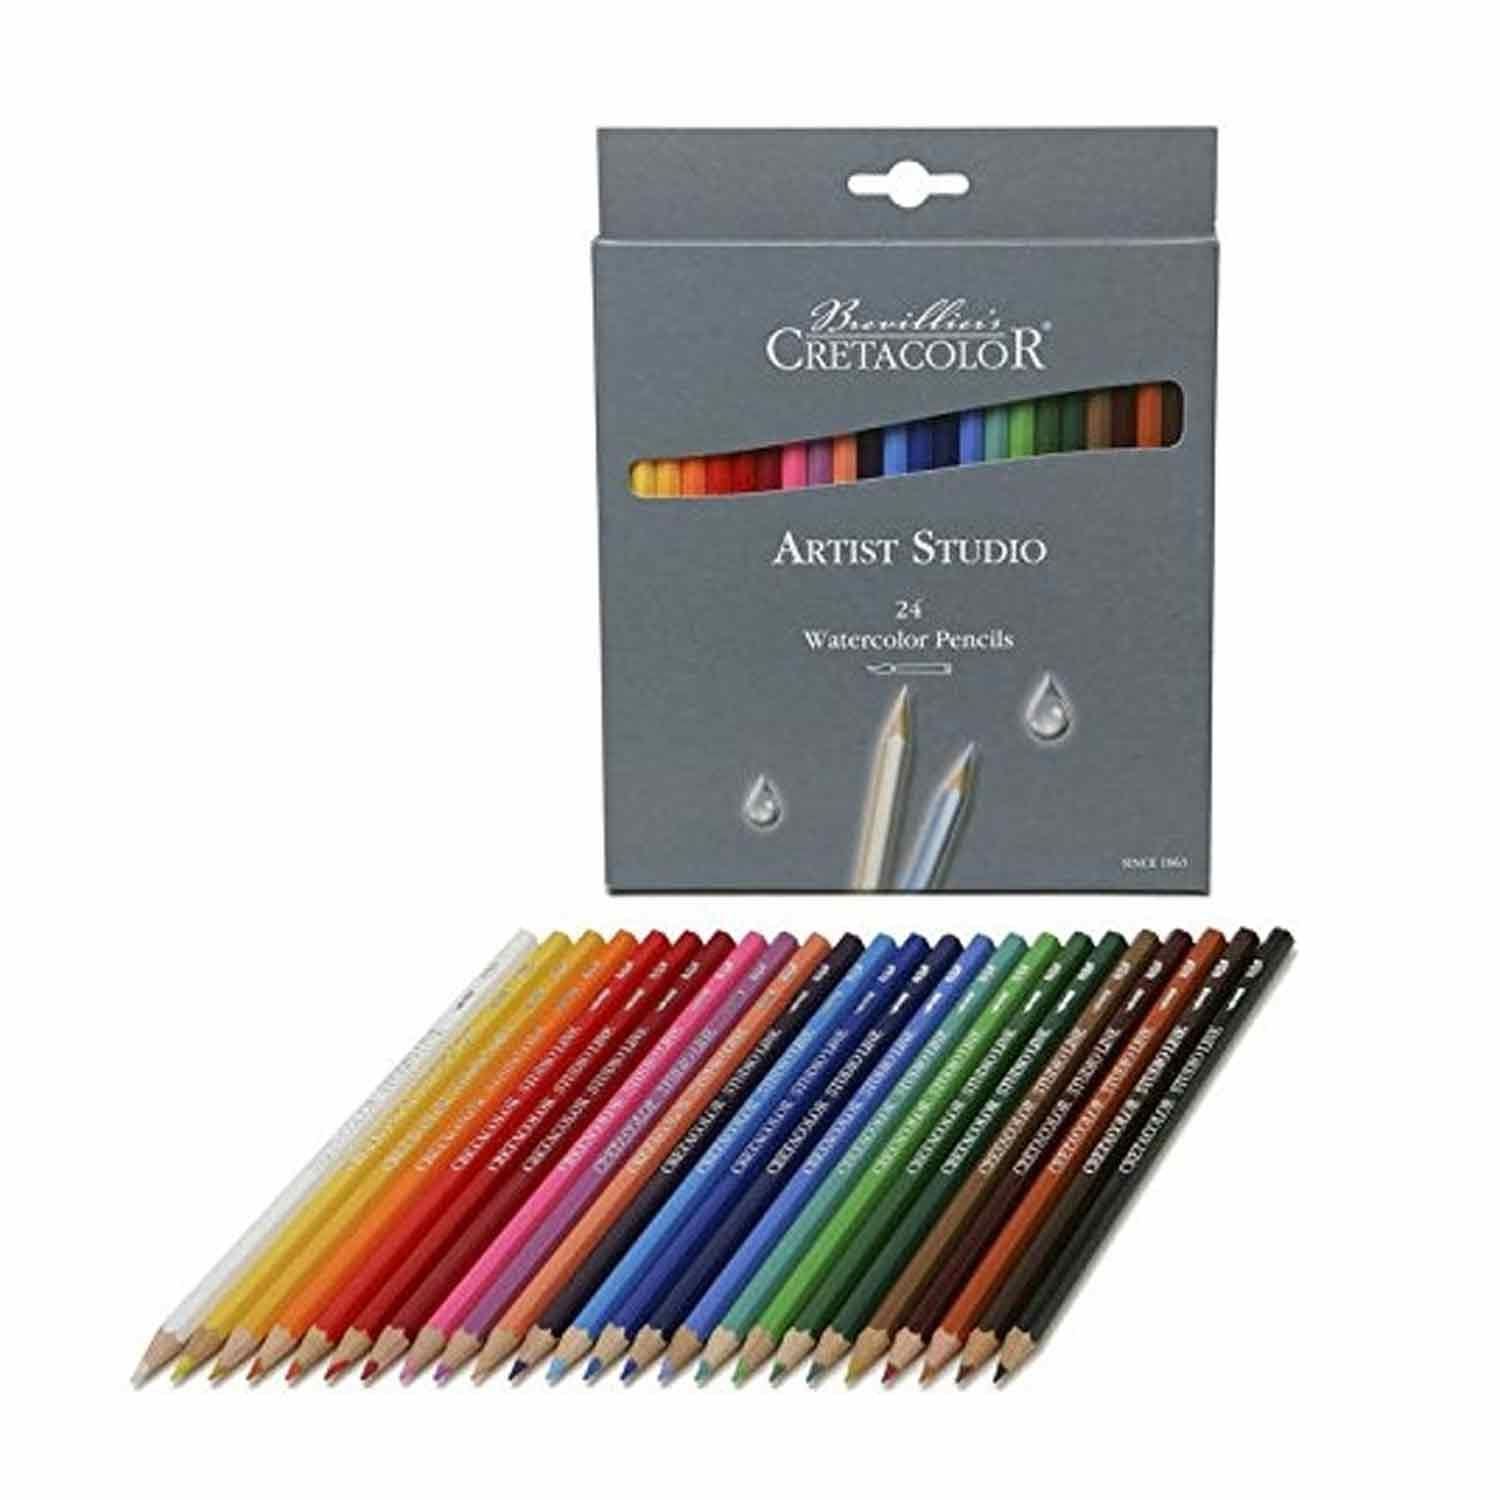 24 crayons de couleur aquarellables Artist Studio - Brevillier's Cretacolor